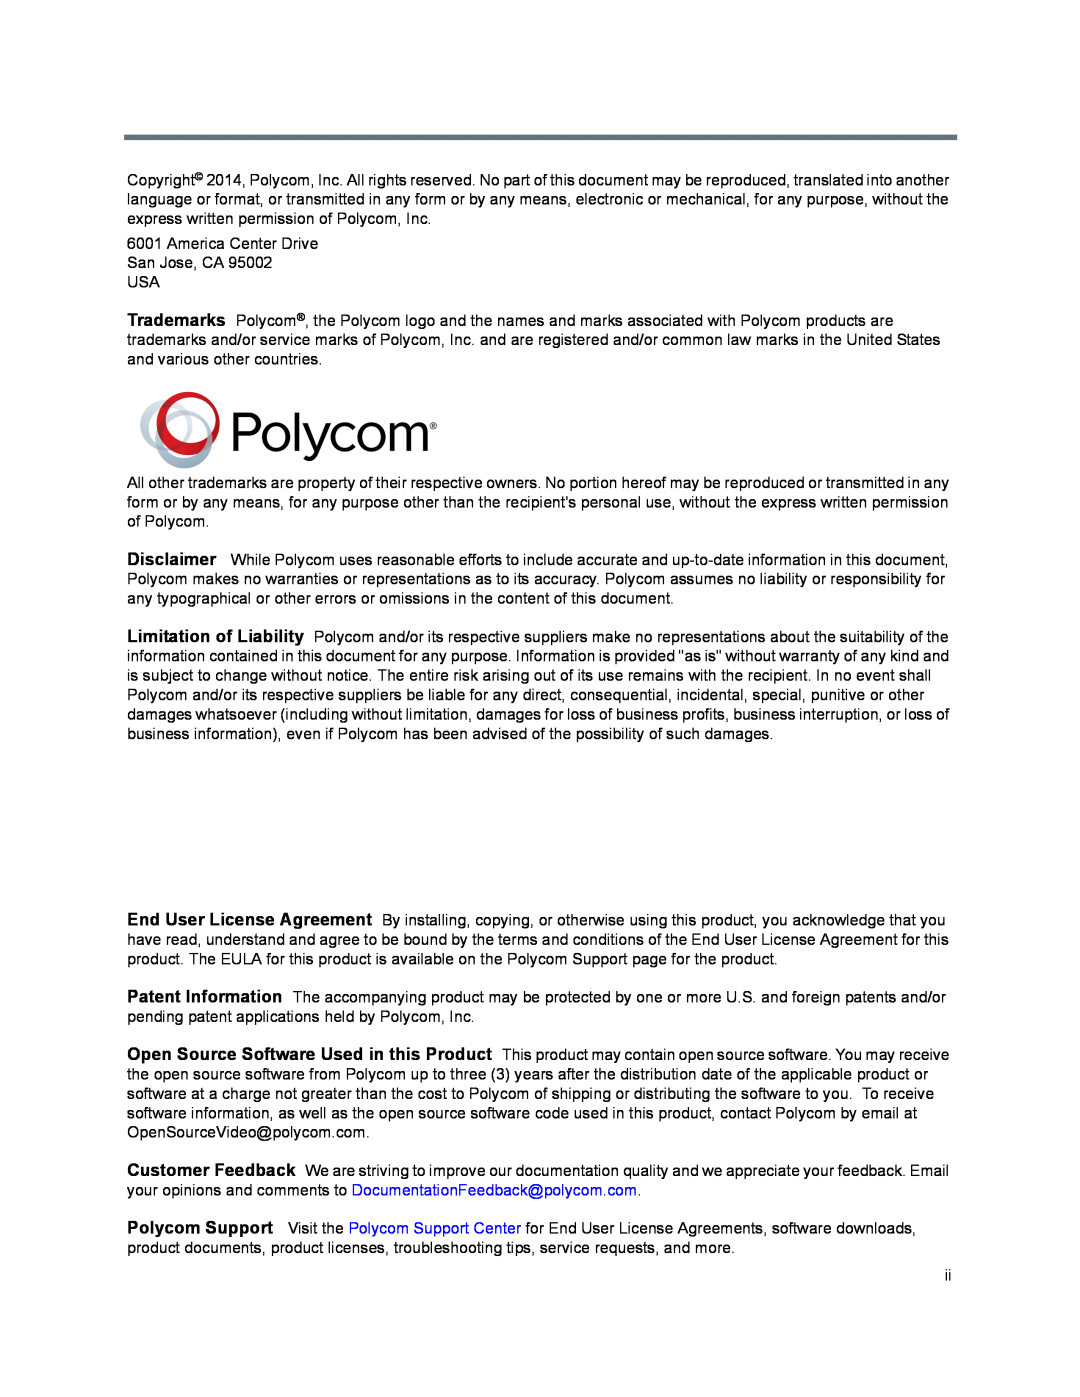 Polycom 40/0 manual America Center Drive San Jose, CA 95002 USA 